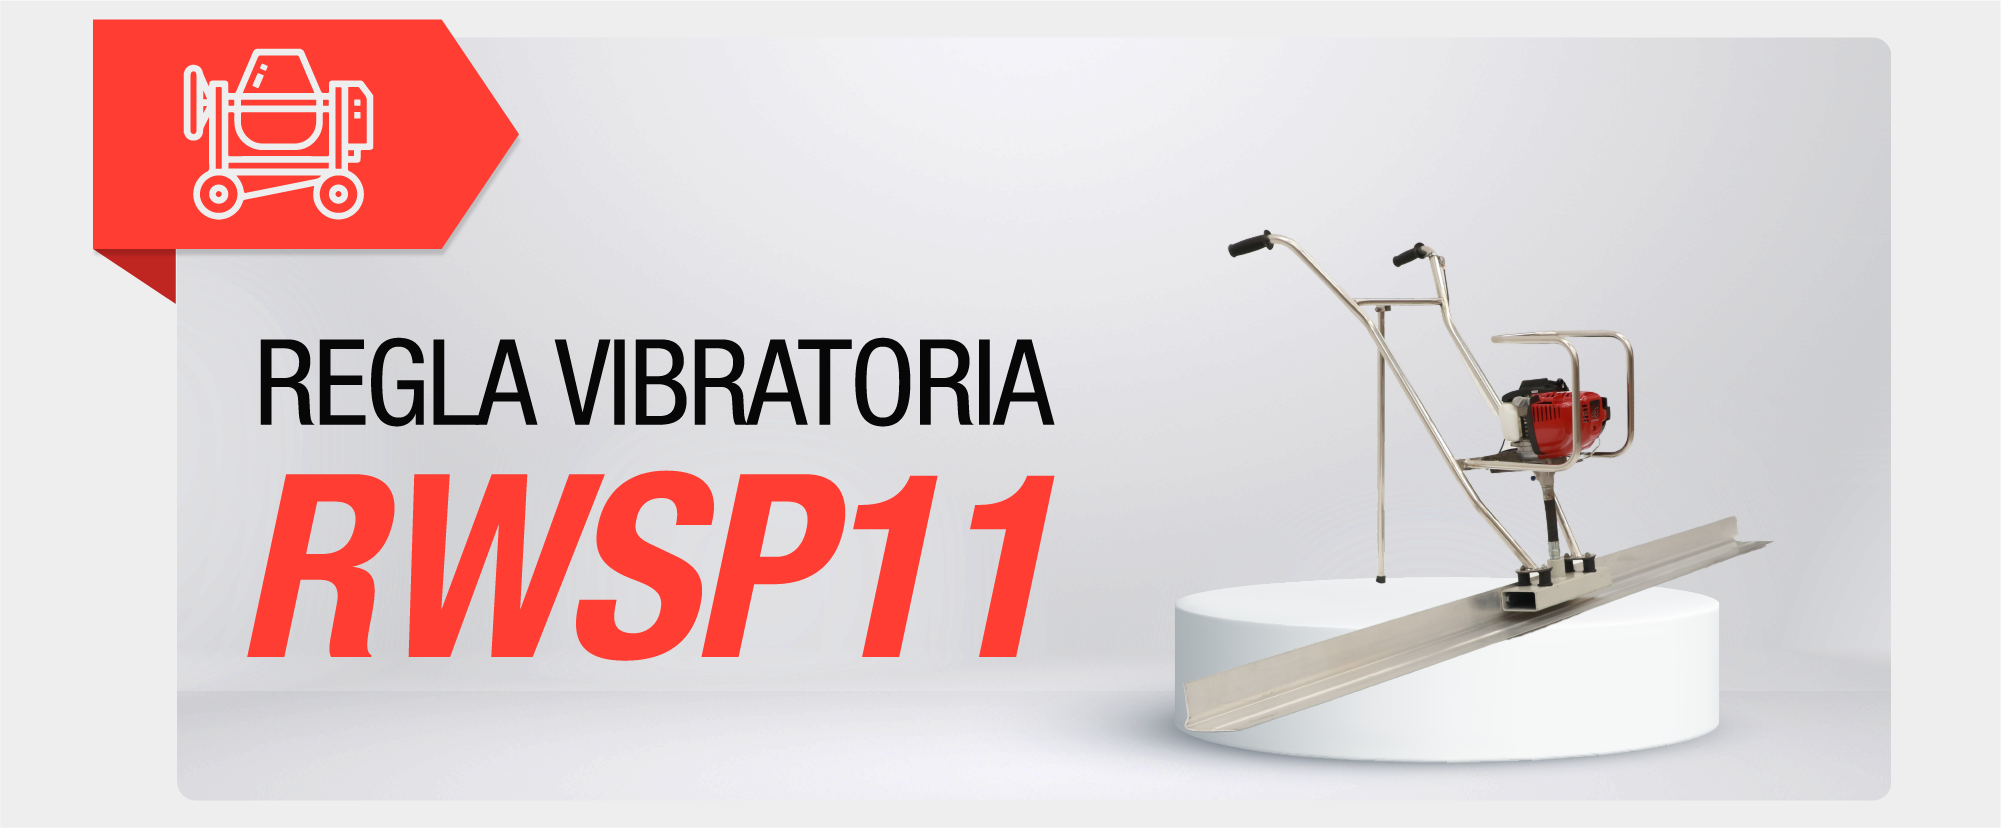 Regla vibratoria RWSP11 - MADISA CON-M003